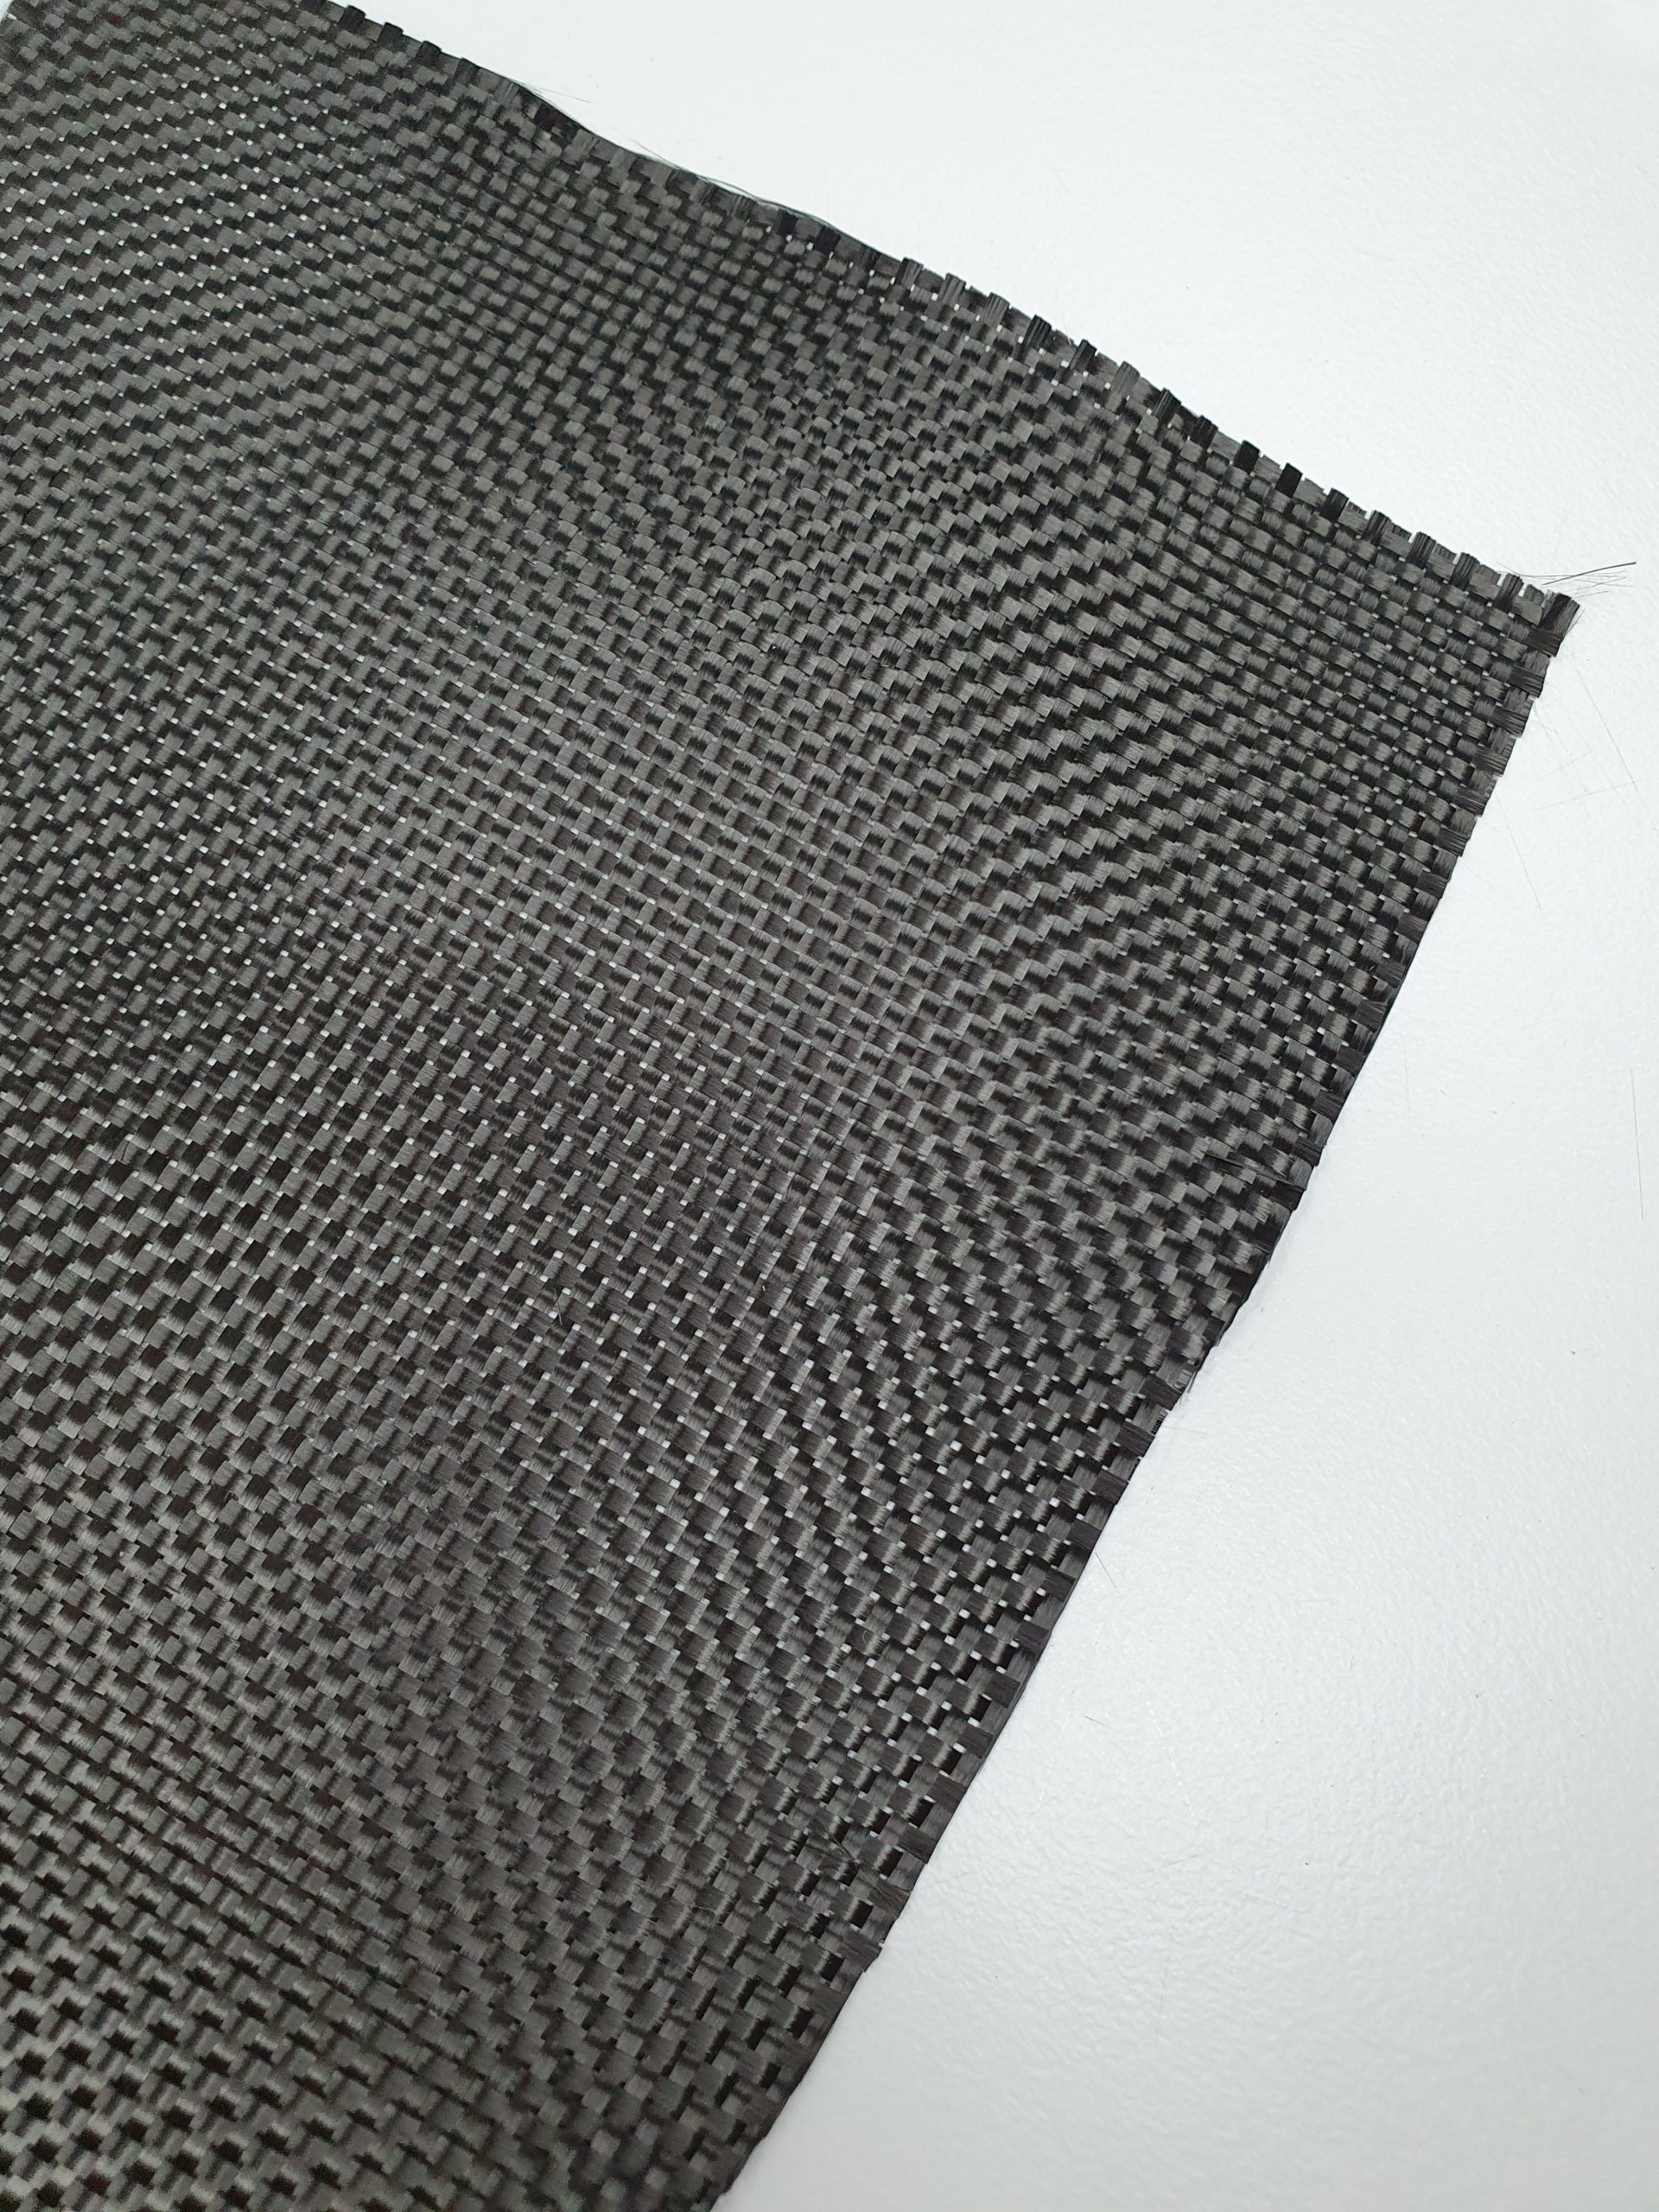 Free Samples 3K 200g Bd Toray Carbon Fiber Fabric - China Carbon Fiber  Fabric, 3K Carbon Fiber Fabric